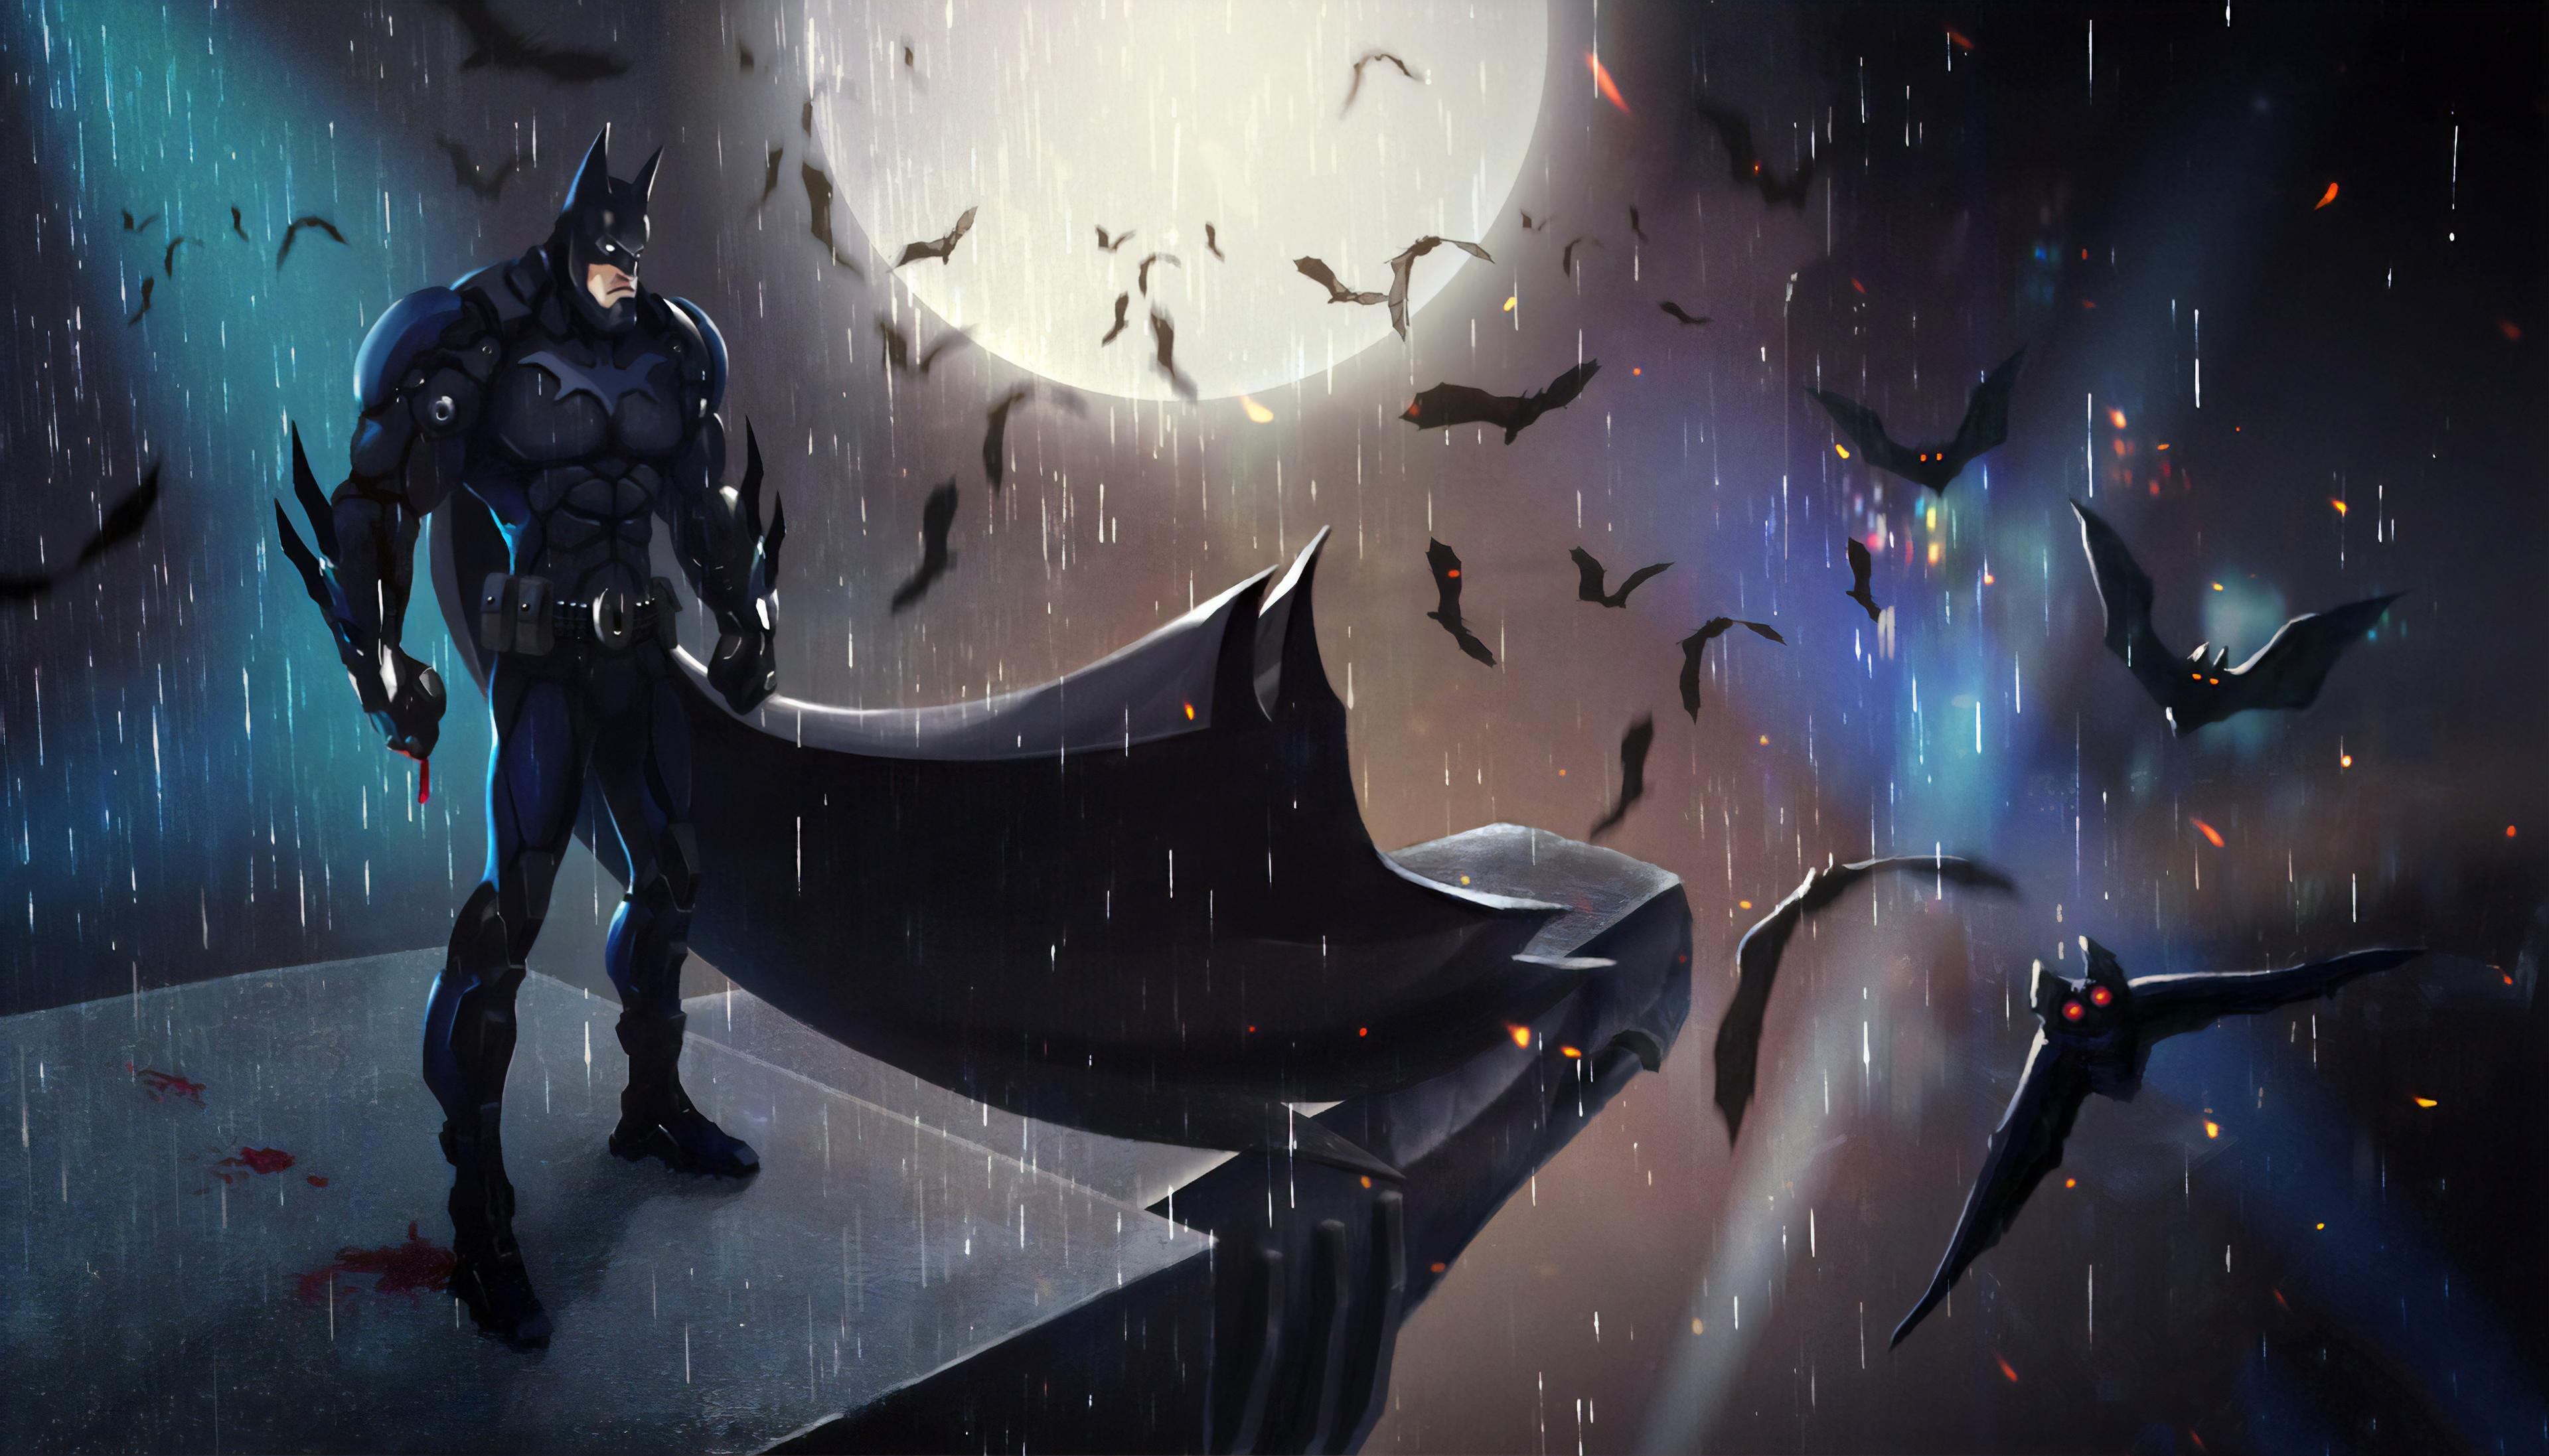 Batman 4k Ultra HD Wallpaper by Christian Villacis